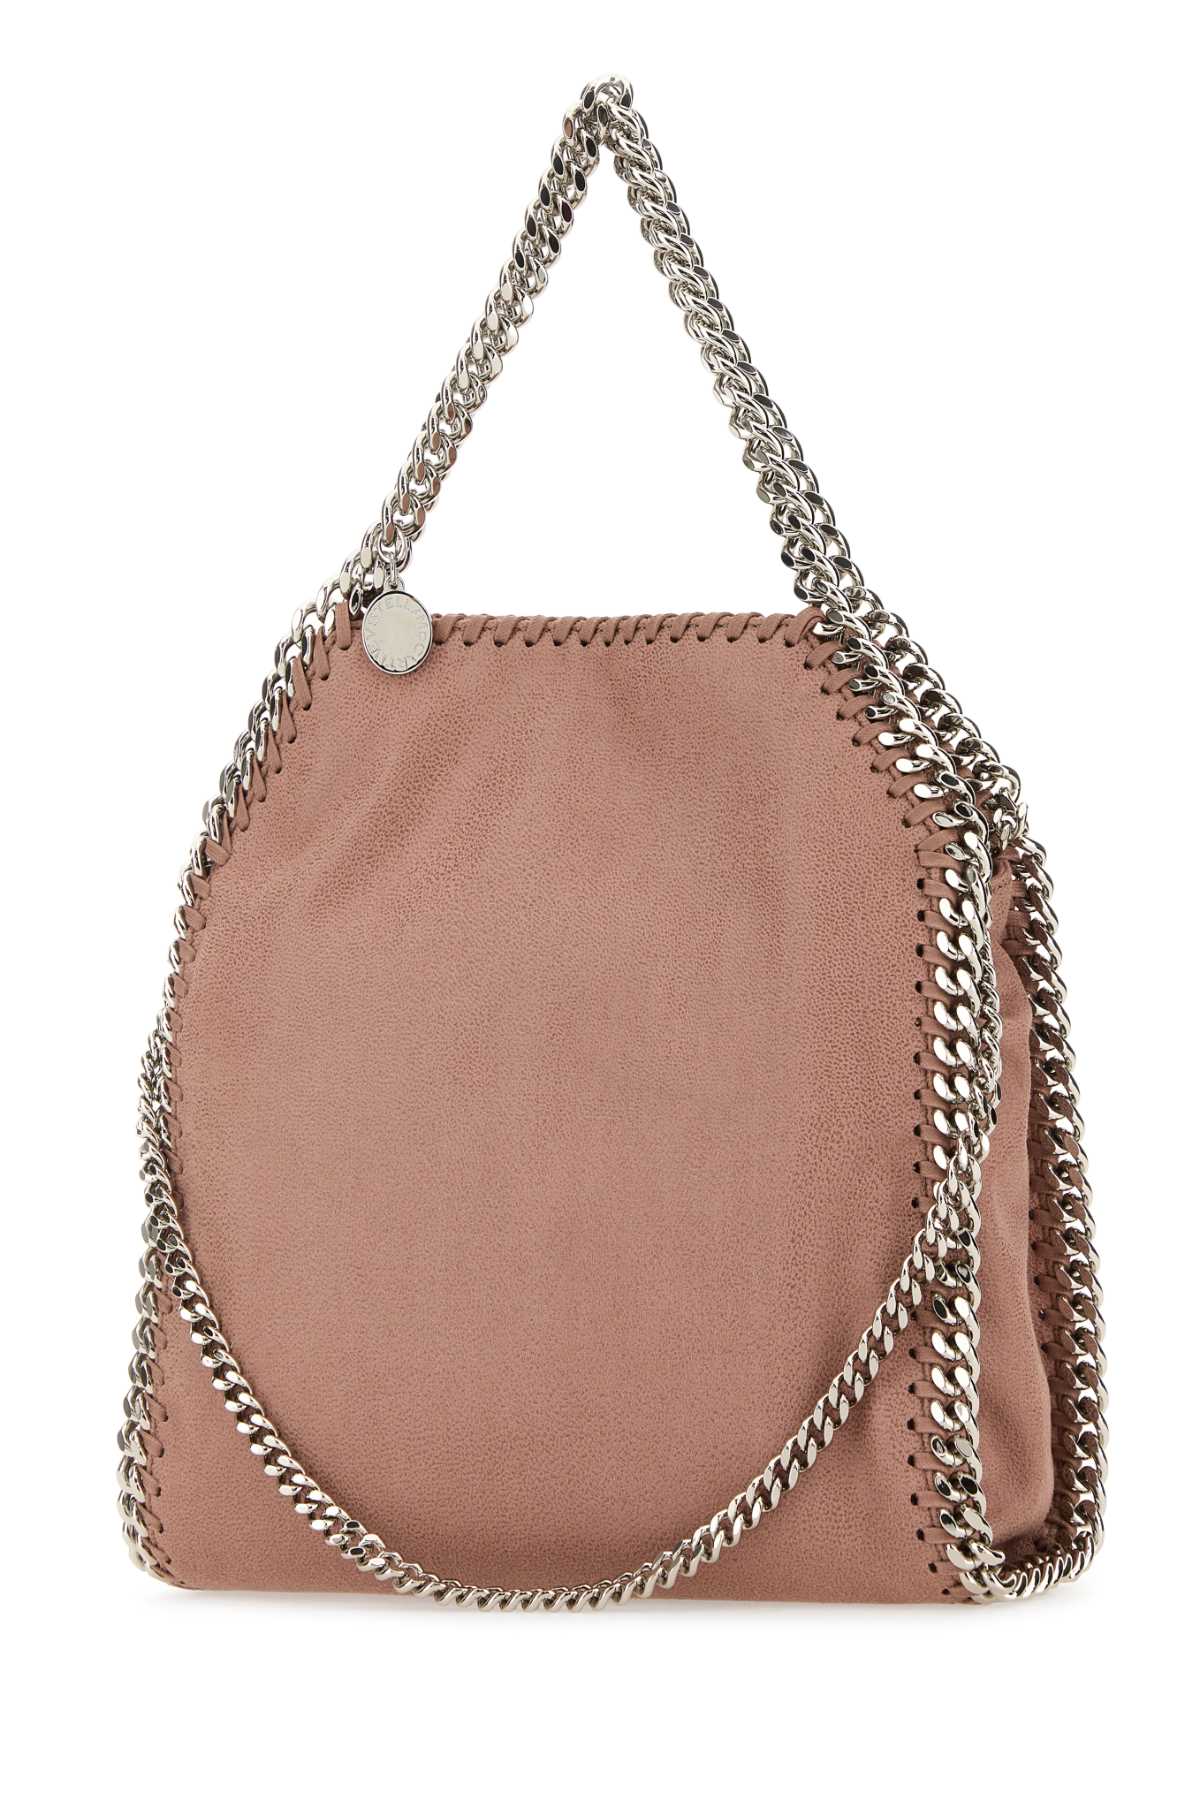 Stella Mccartney Antiqued Pink Shaggy Deer Mini Falabella Handbag